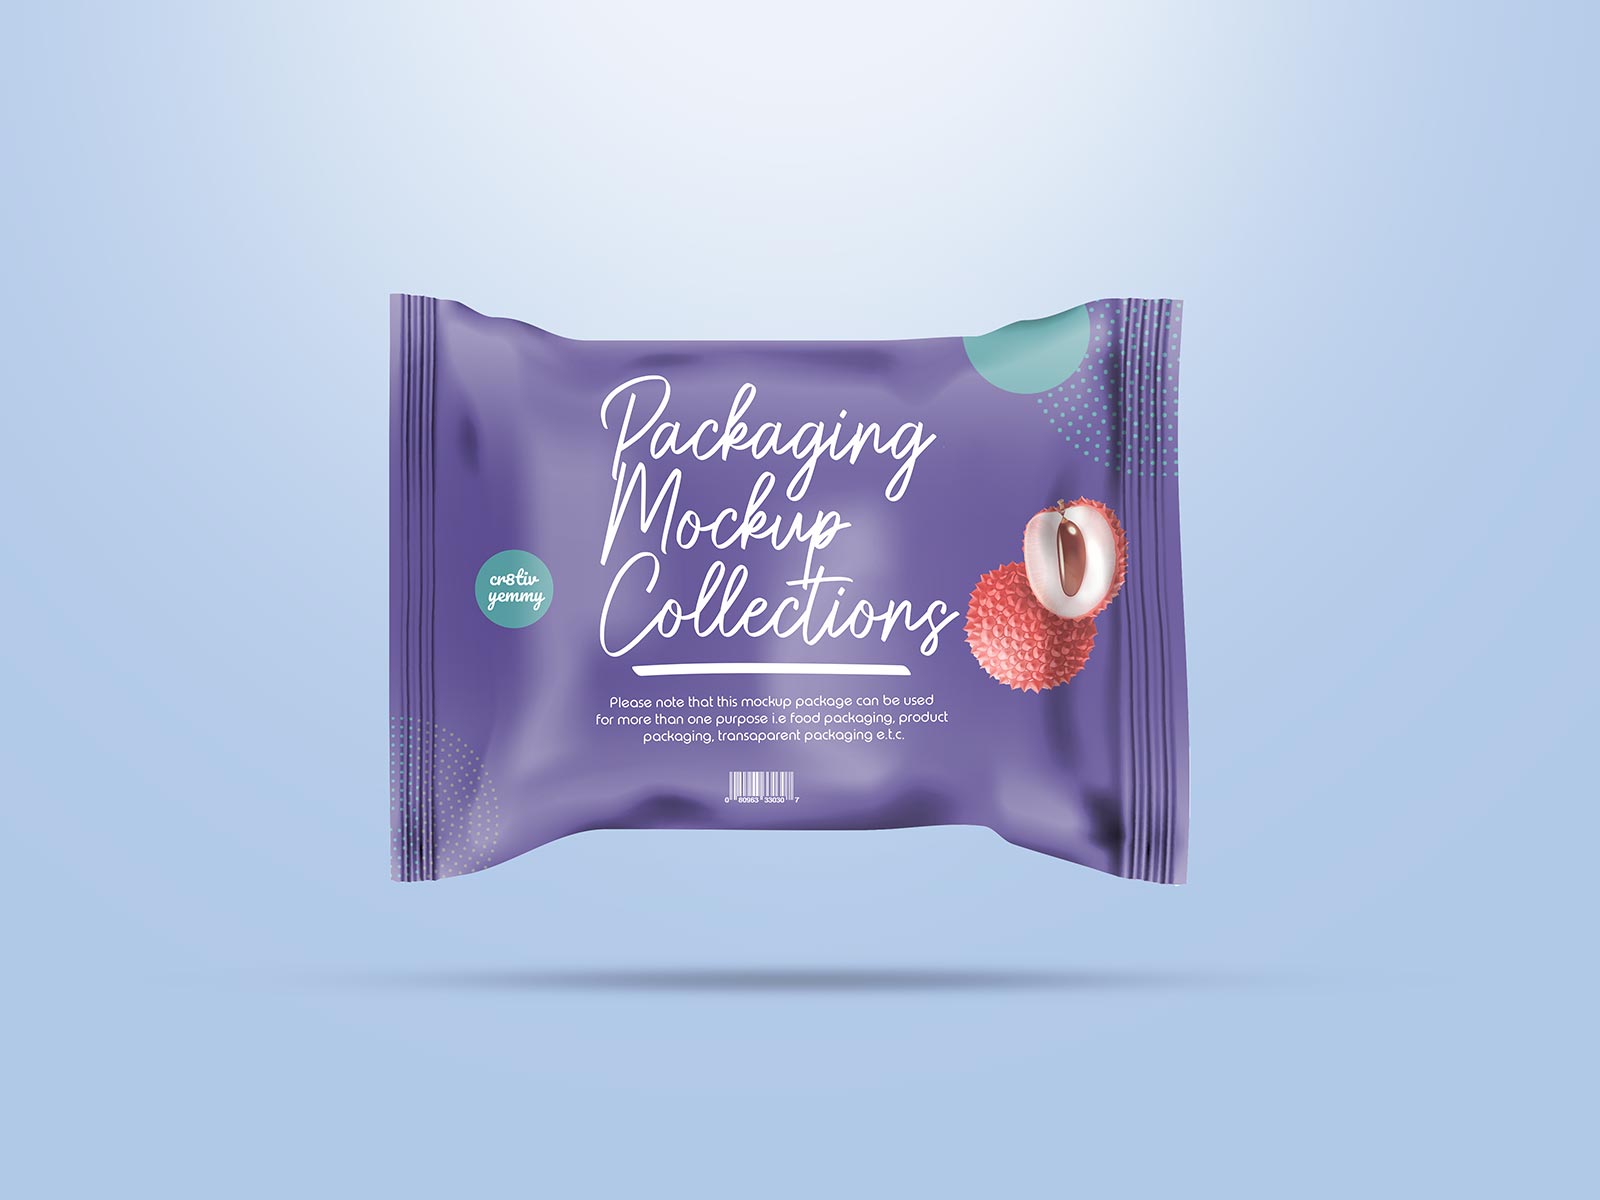 Free Snack Pack Packaging Mockup PSD (1)